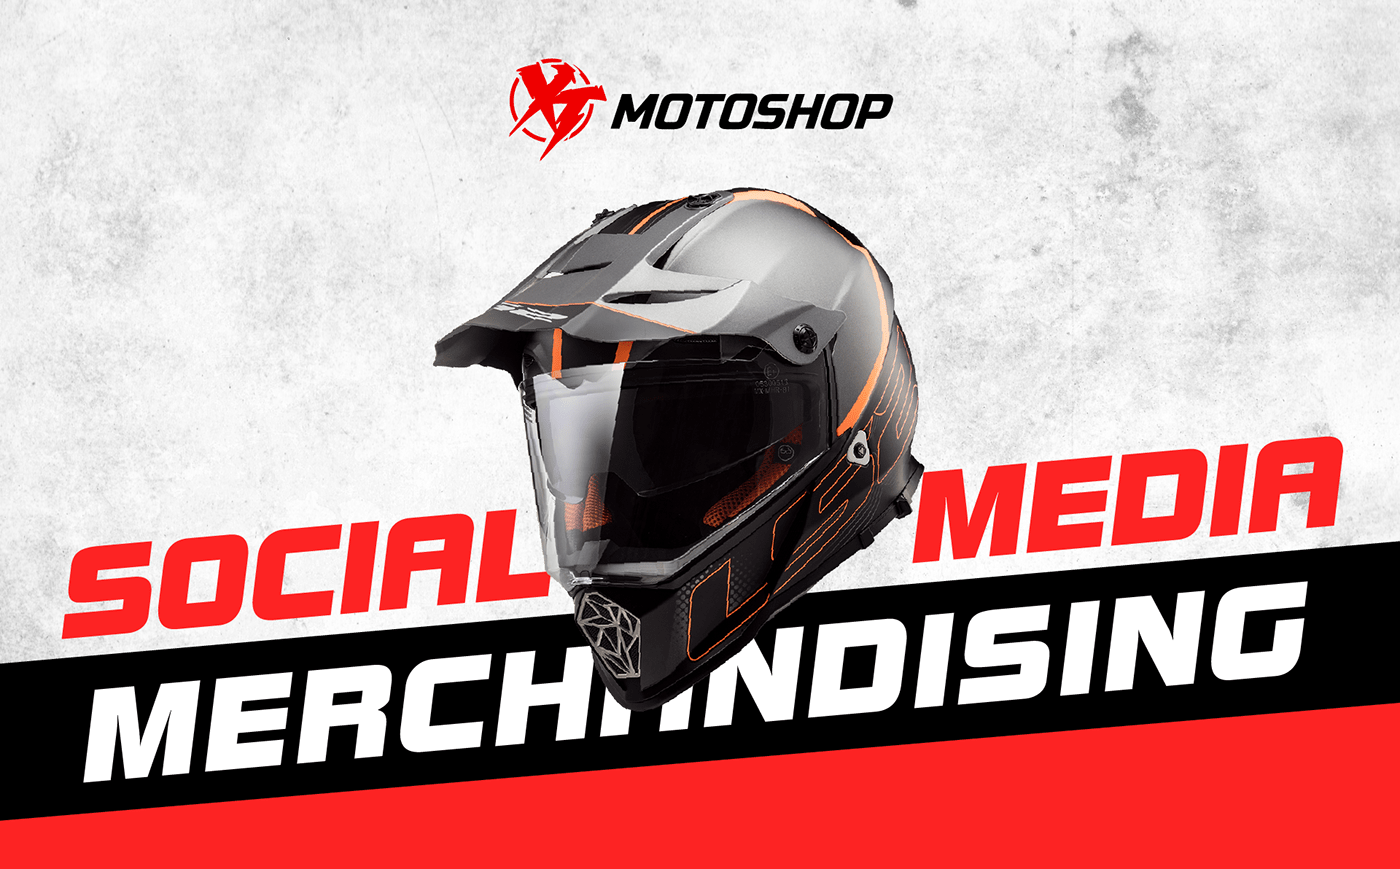 extreme sports graphic design  jacket merchandise Motocross motorcycle publicidad social media